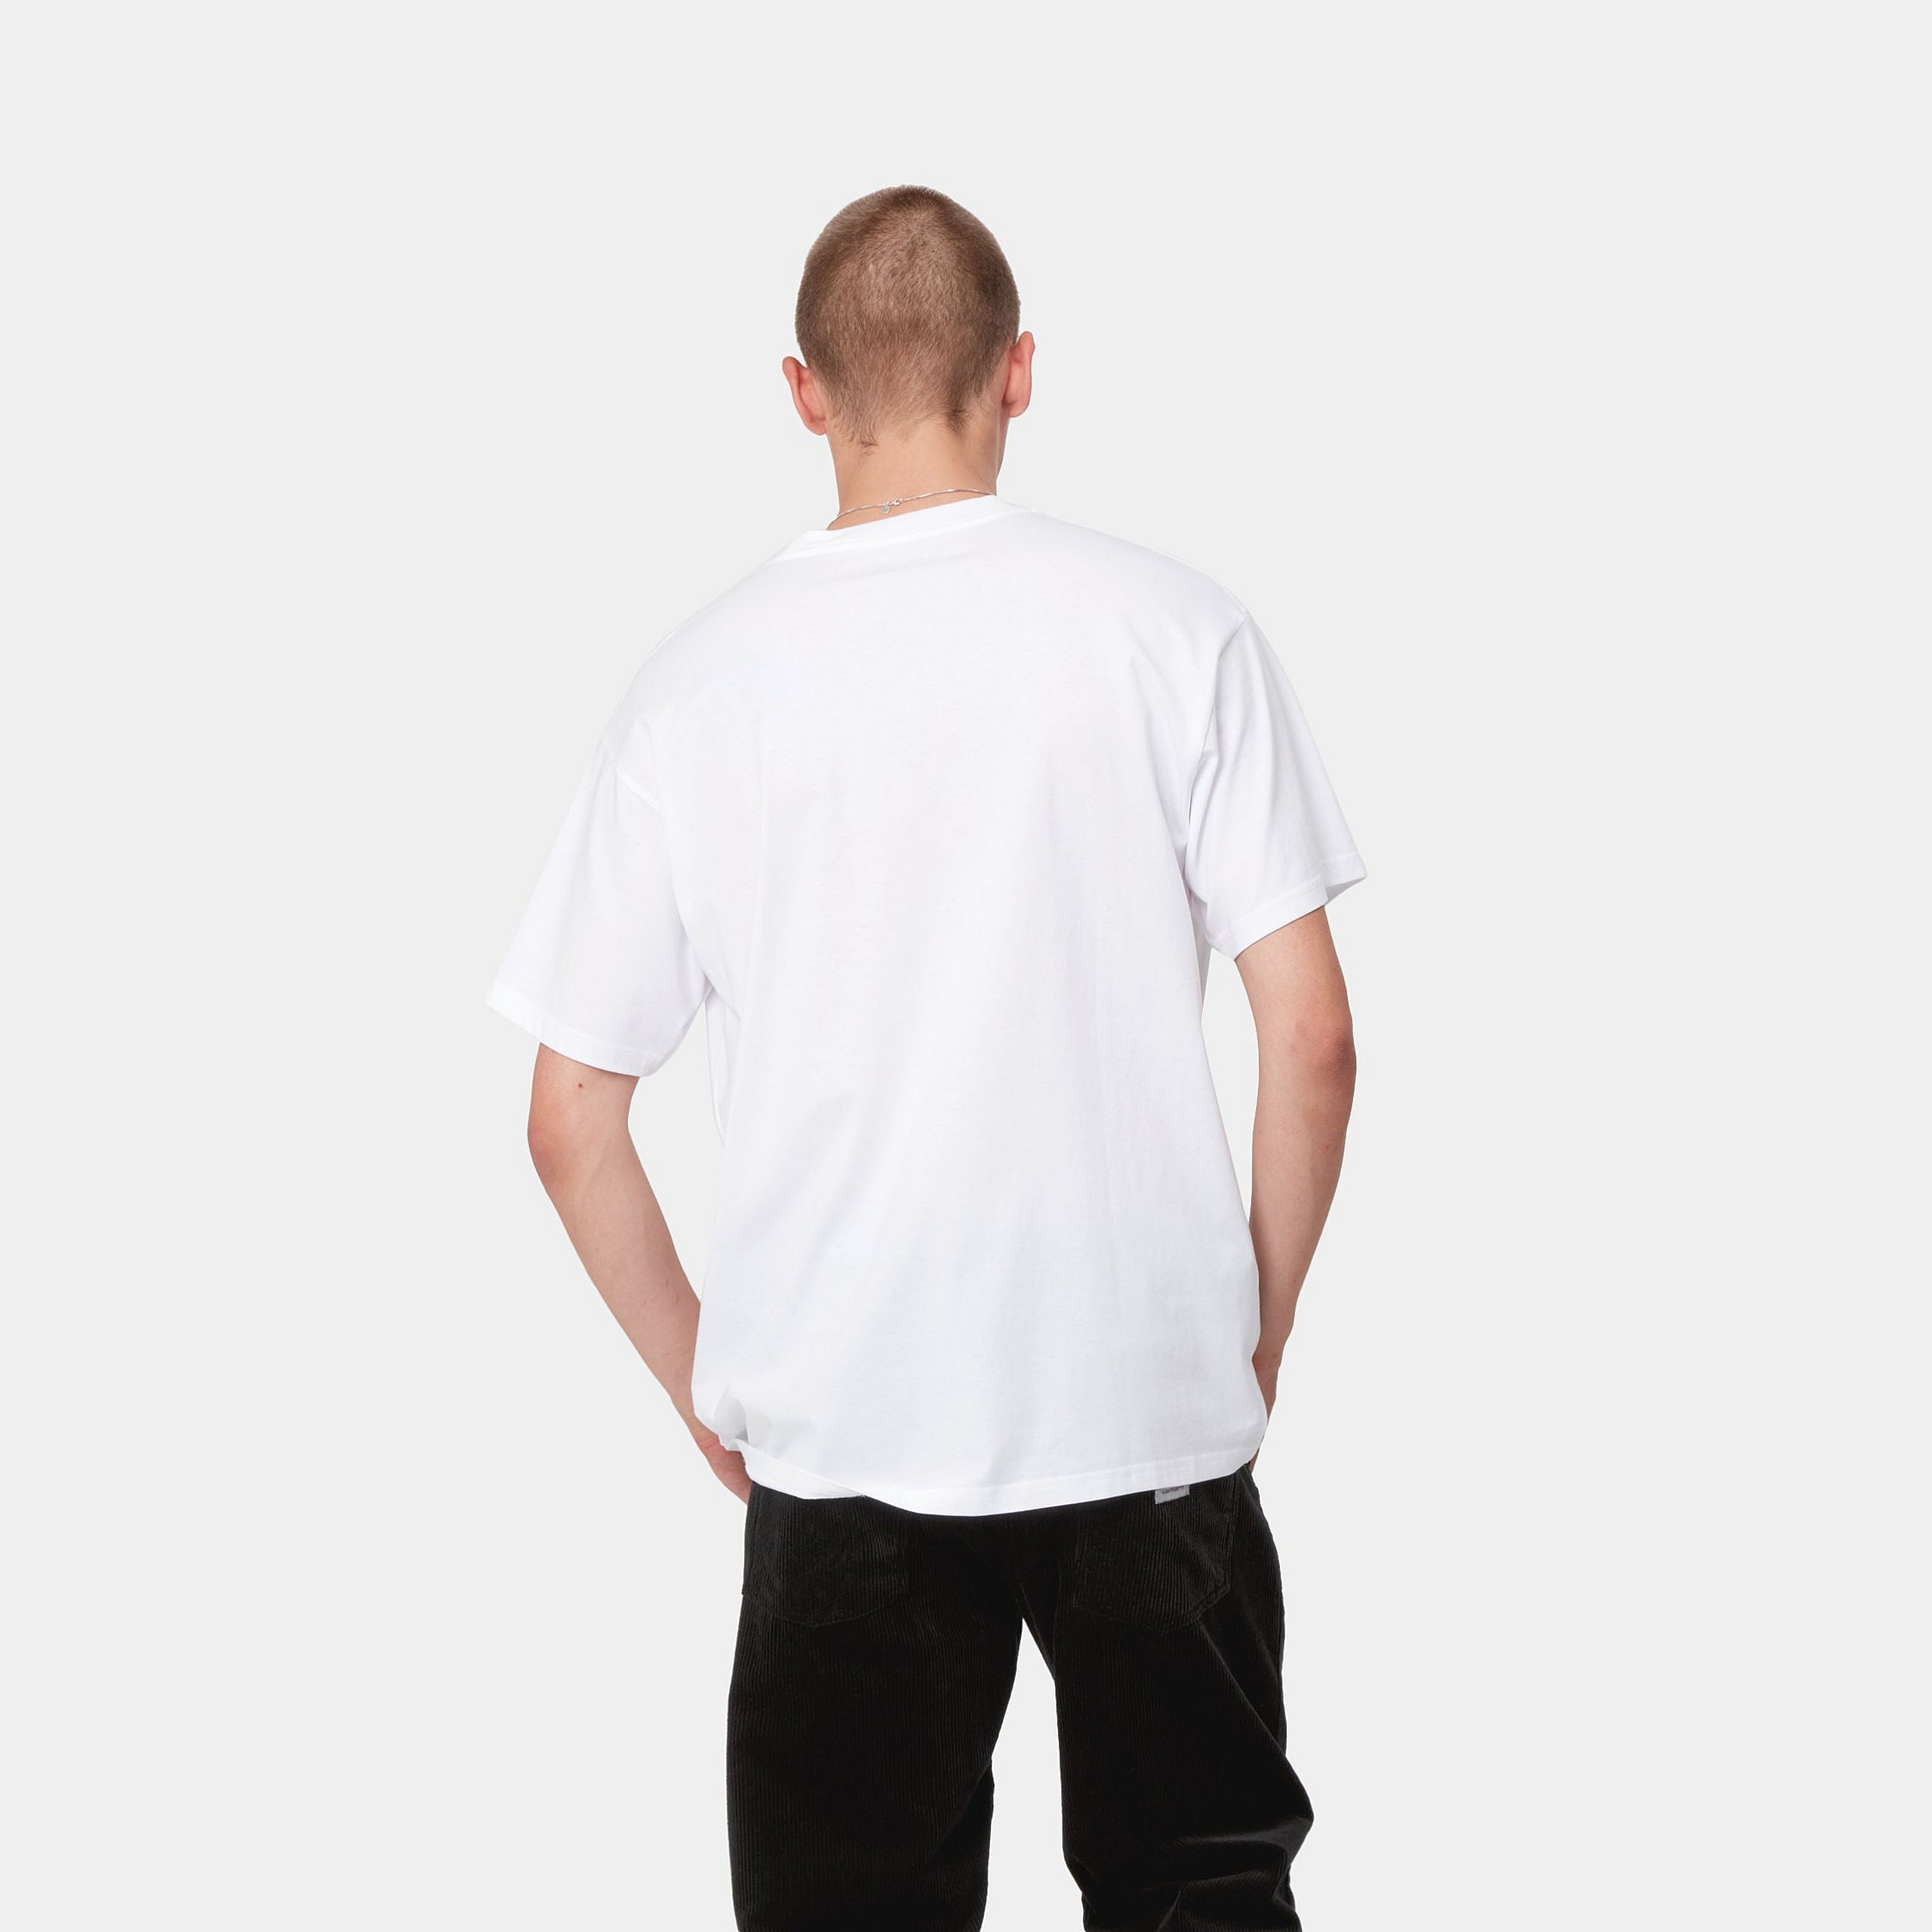 Carhartt WIP S/S Script Embroidery T-Shirt - White/Black